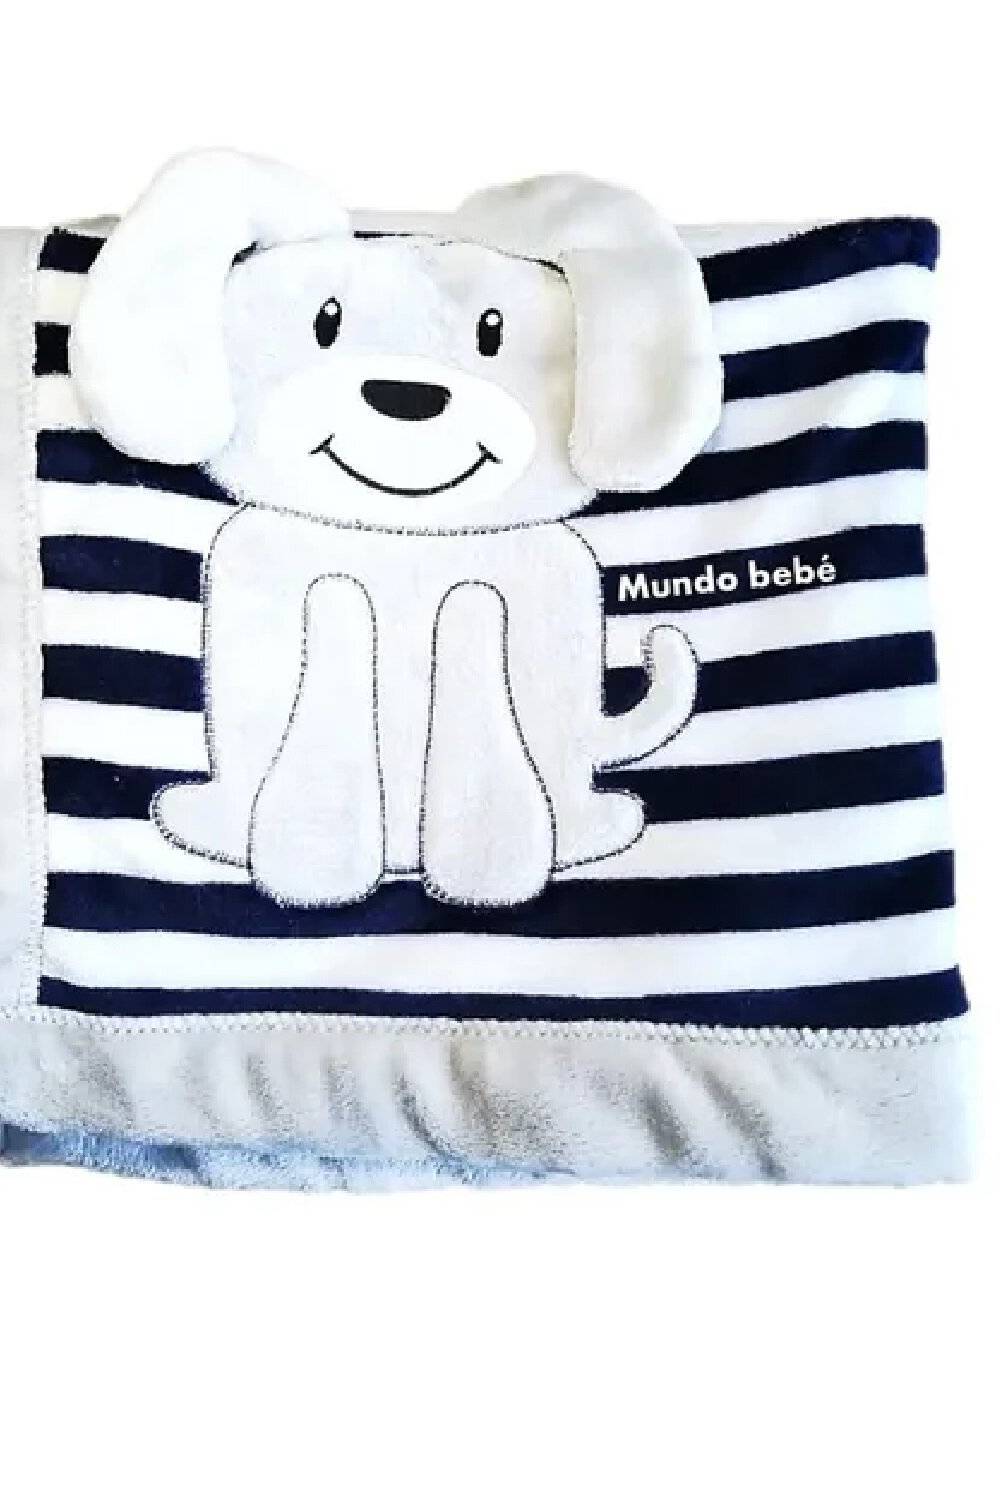 Mundo Bebé - Cobija cobertor para bebé térmica